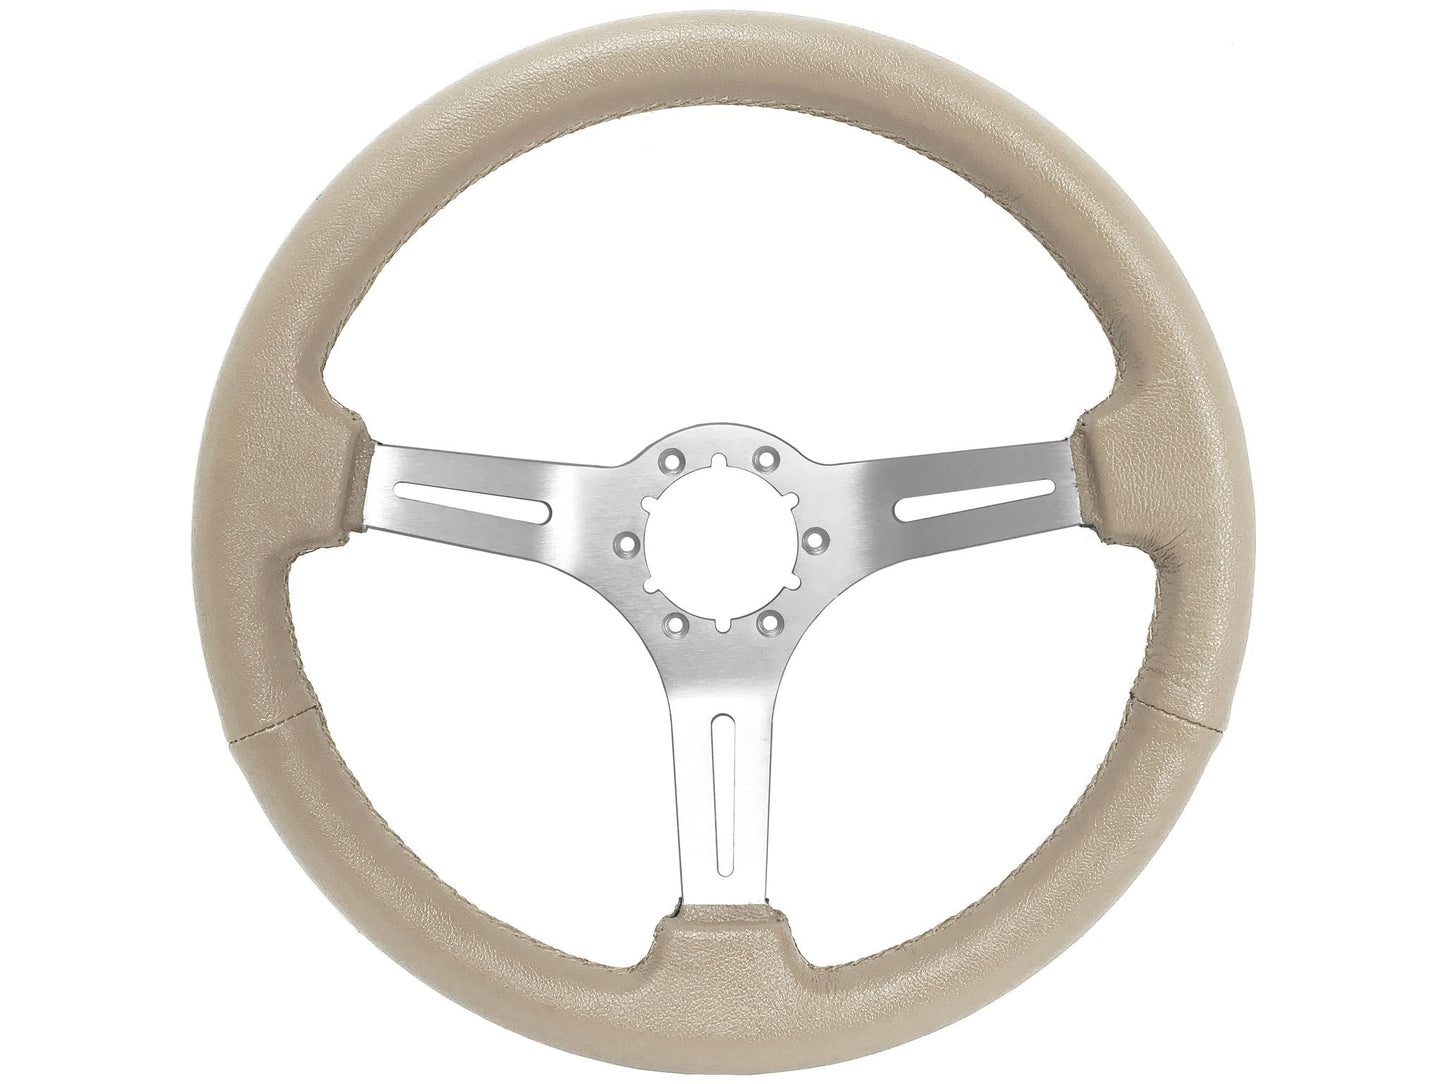 1970 Ford Falcon Steering Wheel Kit | Tan Leather | ST3014TAN